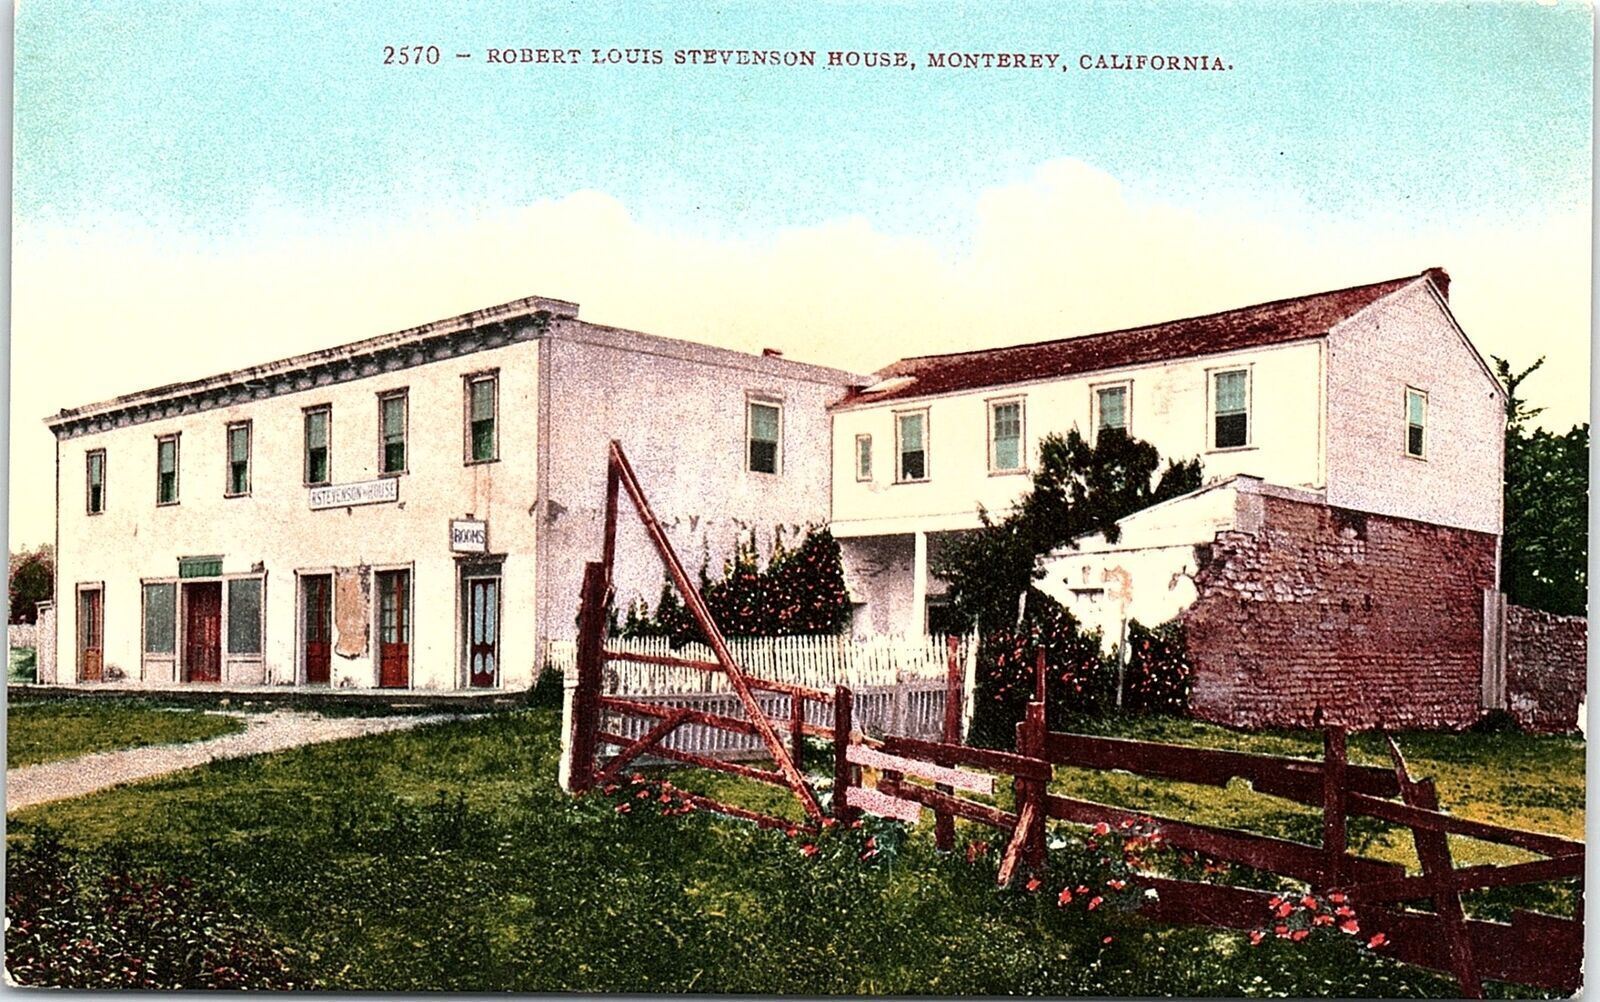 c1910 MONTEREY CALIFORNIA ROBERT LOUIS STEVENSON HOUSE UNPOSTED POSTCARD 41-246